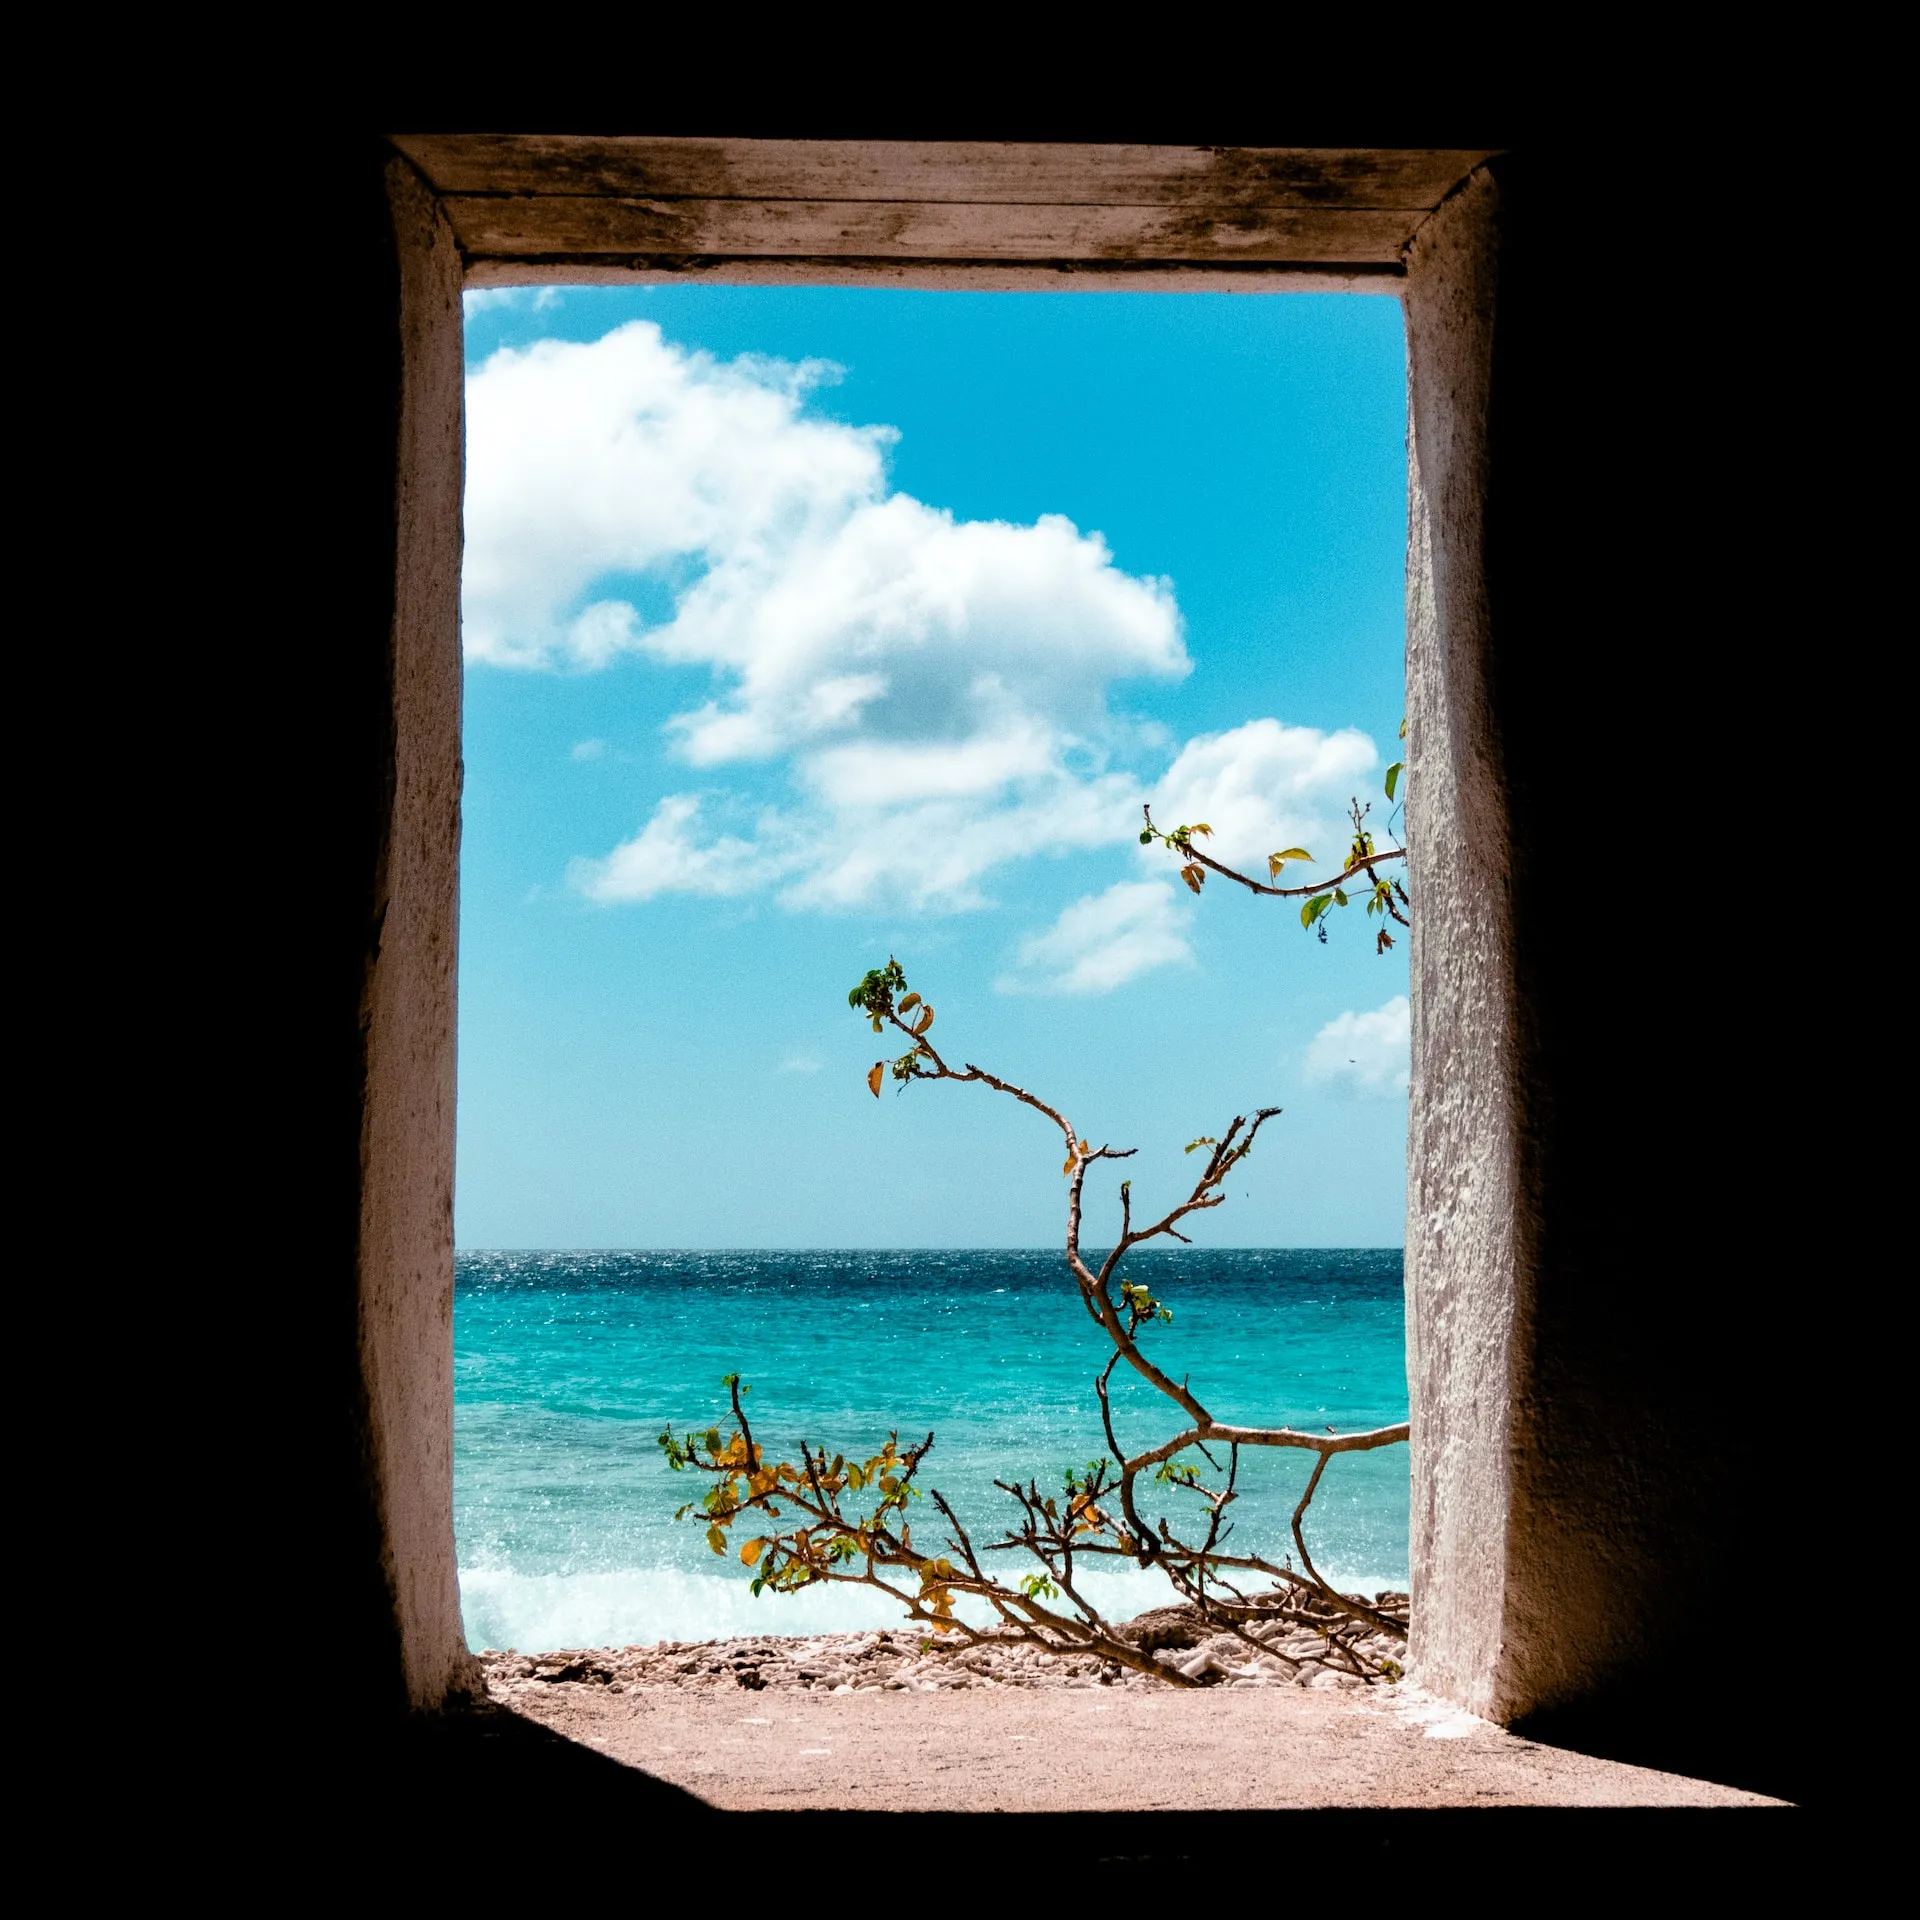 Bonaire eSIM for travelers - Unlimited Data Plans - ByteSIM